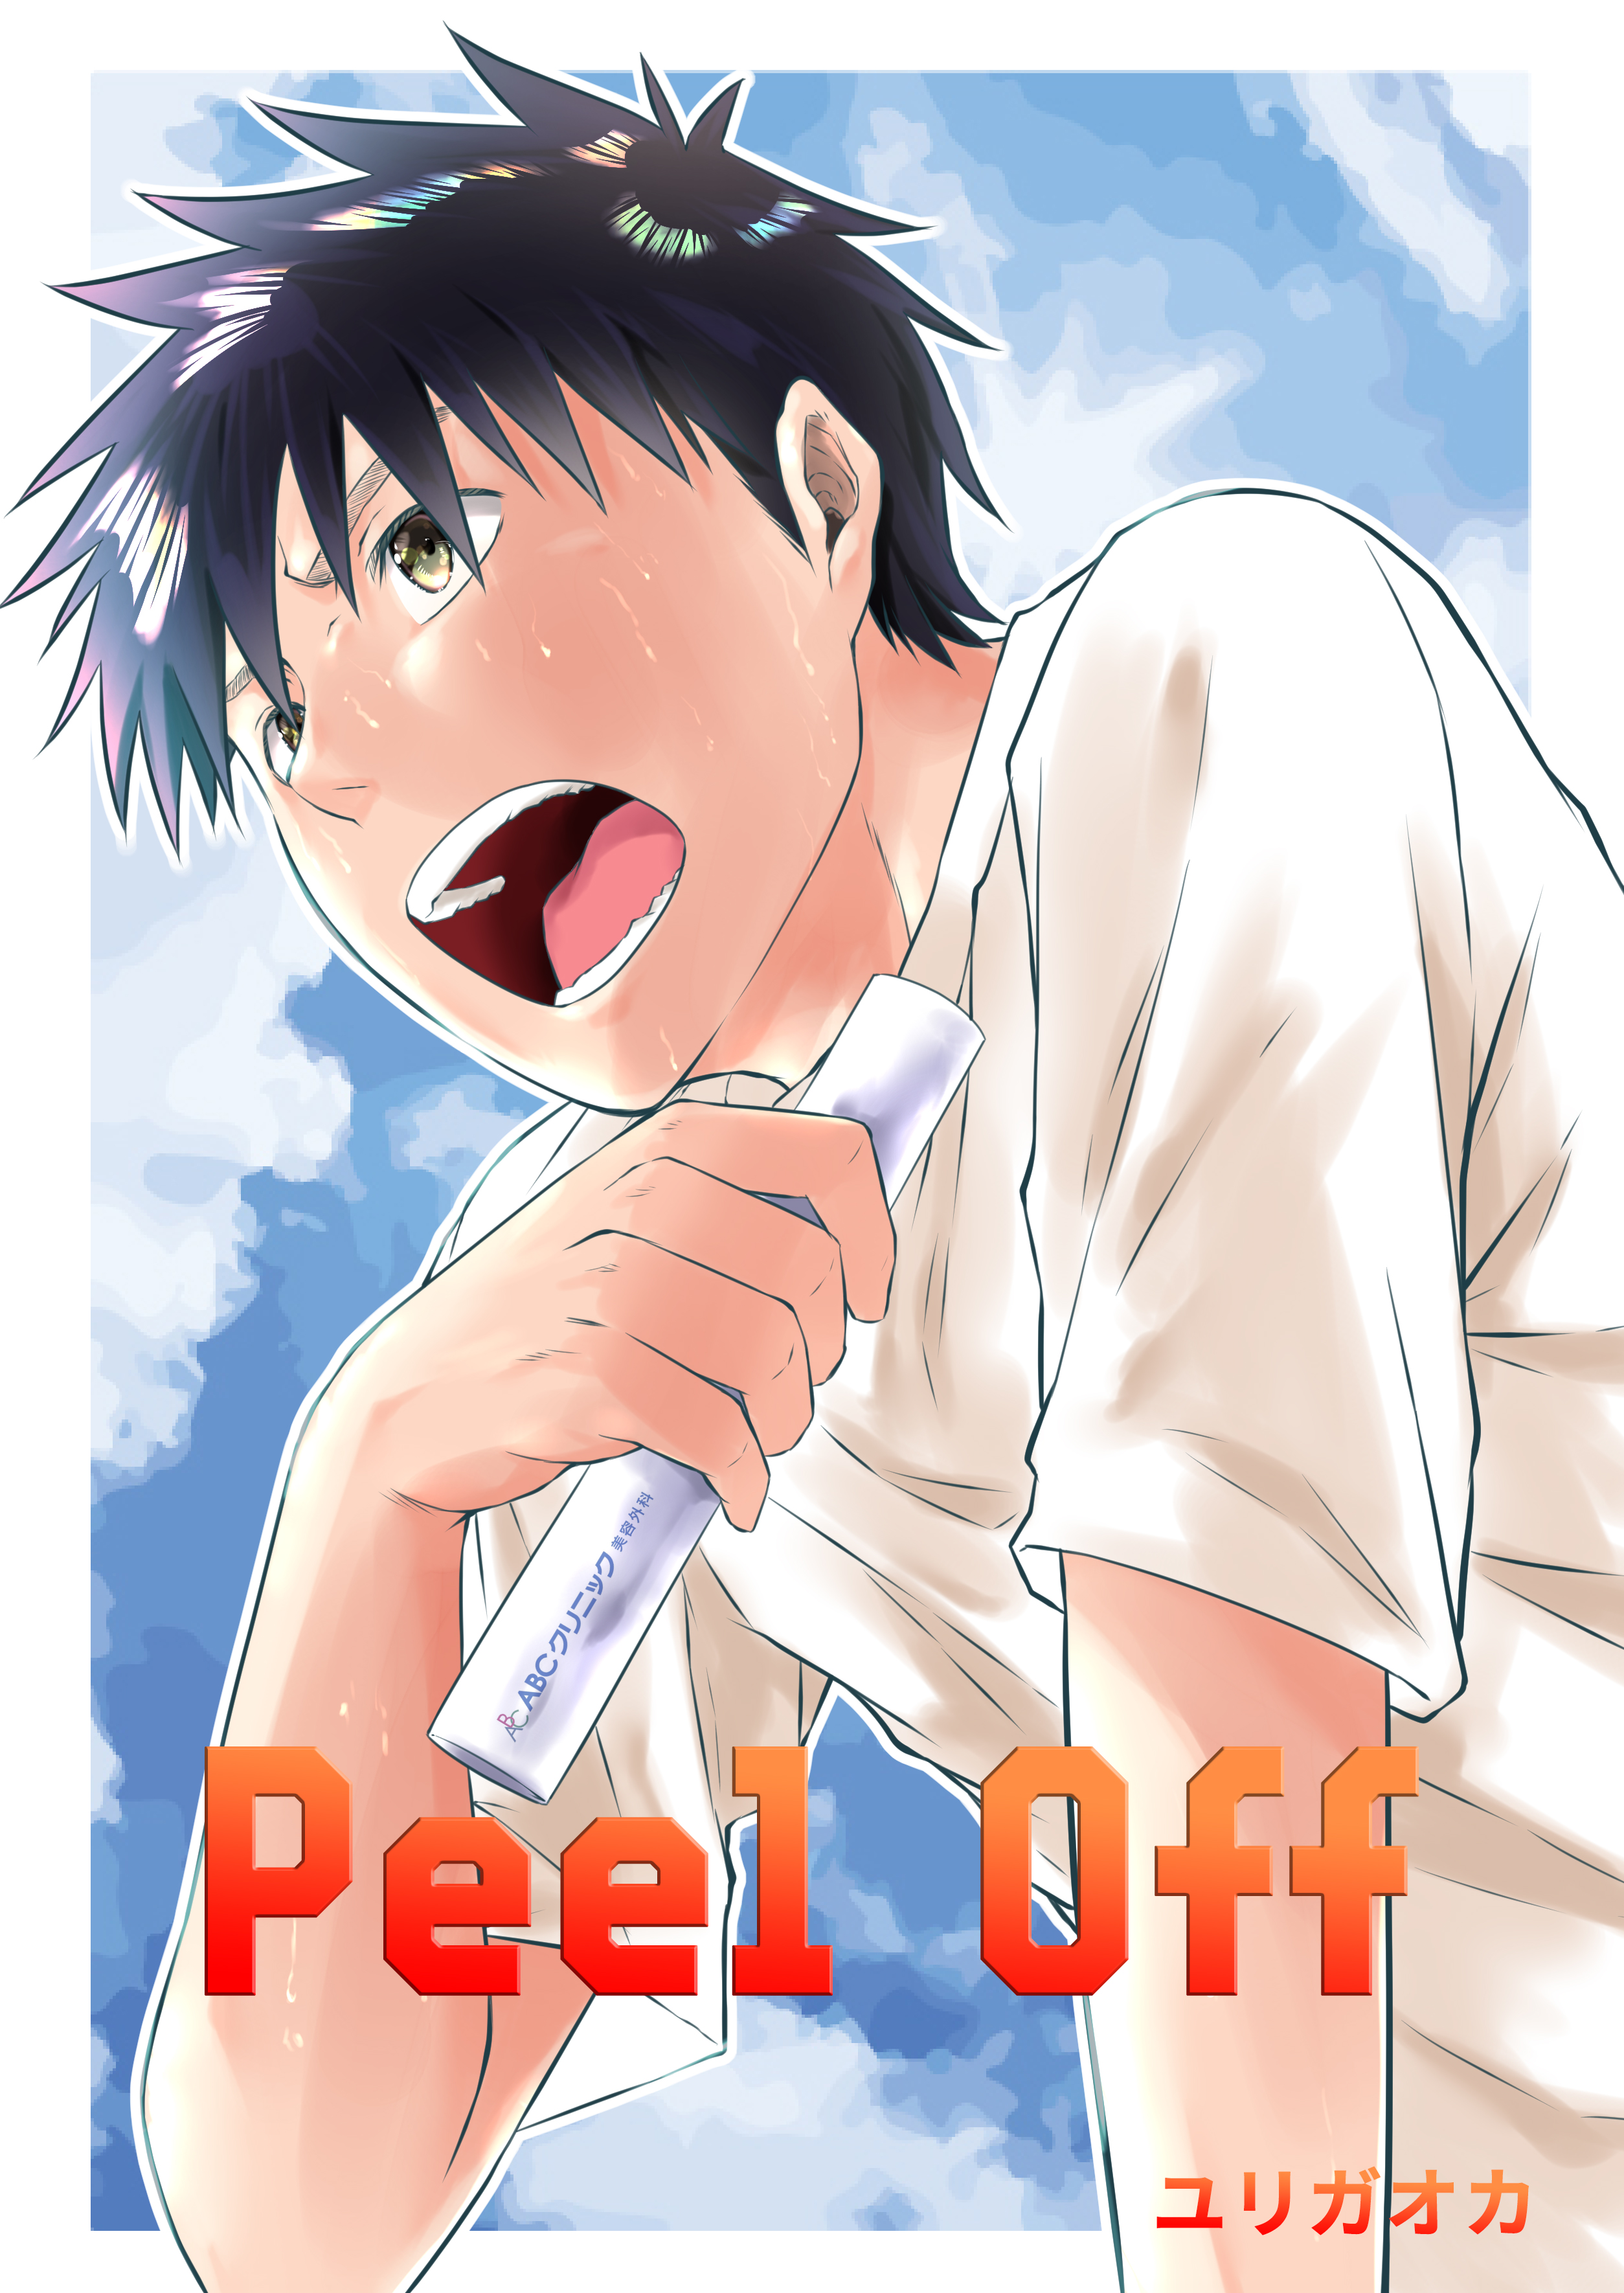 Peel Off